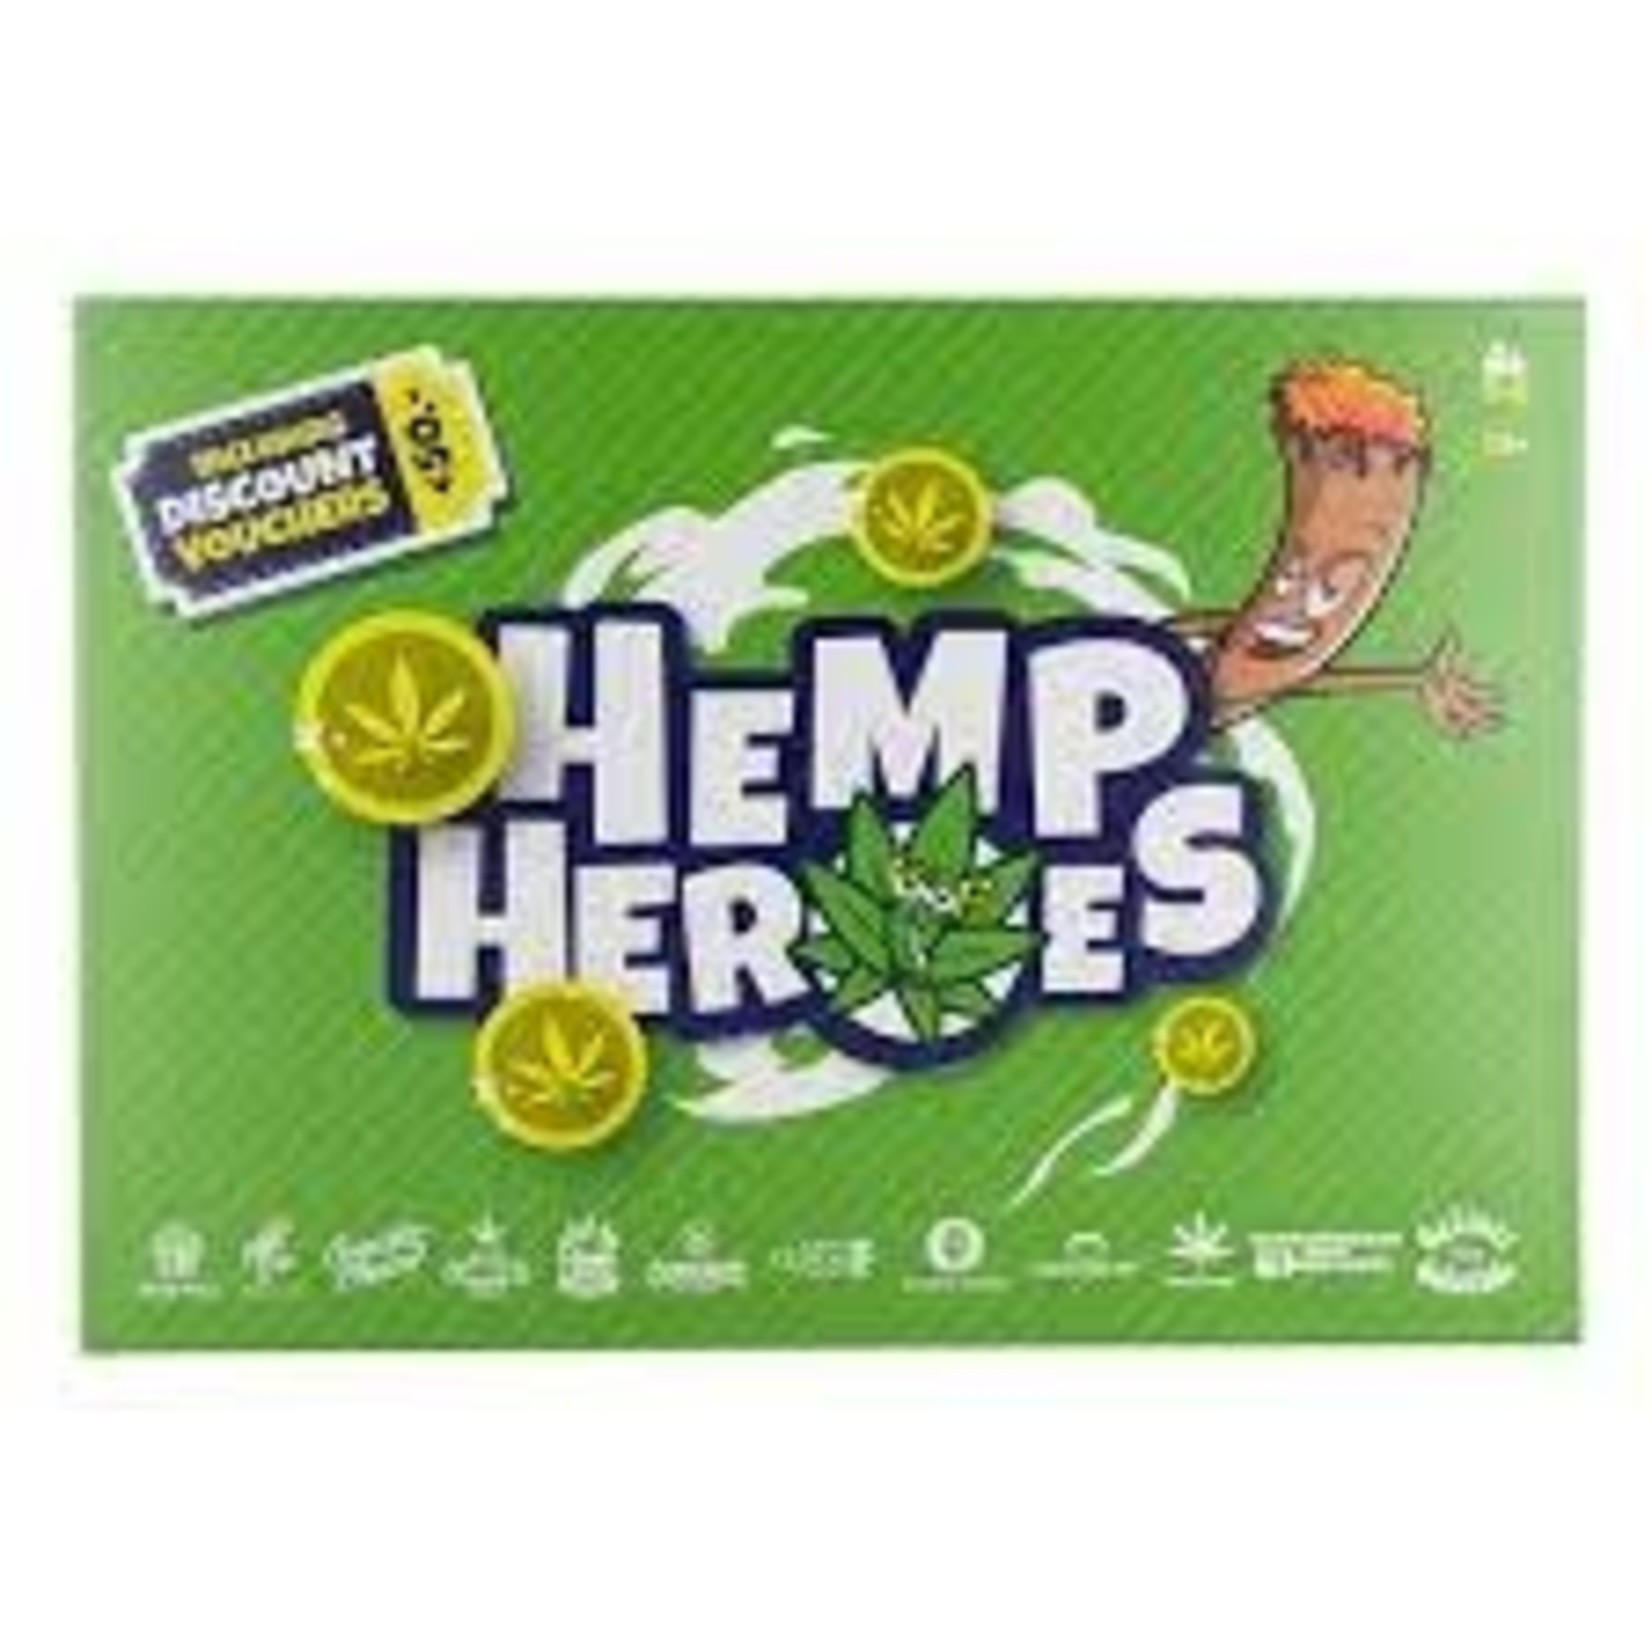 Hemp Heroes Board Game